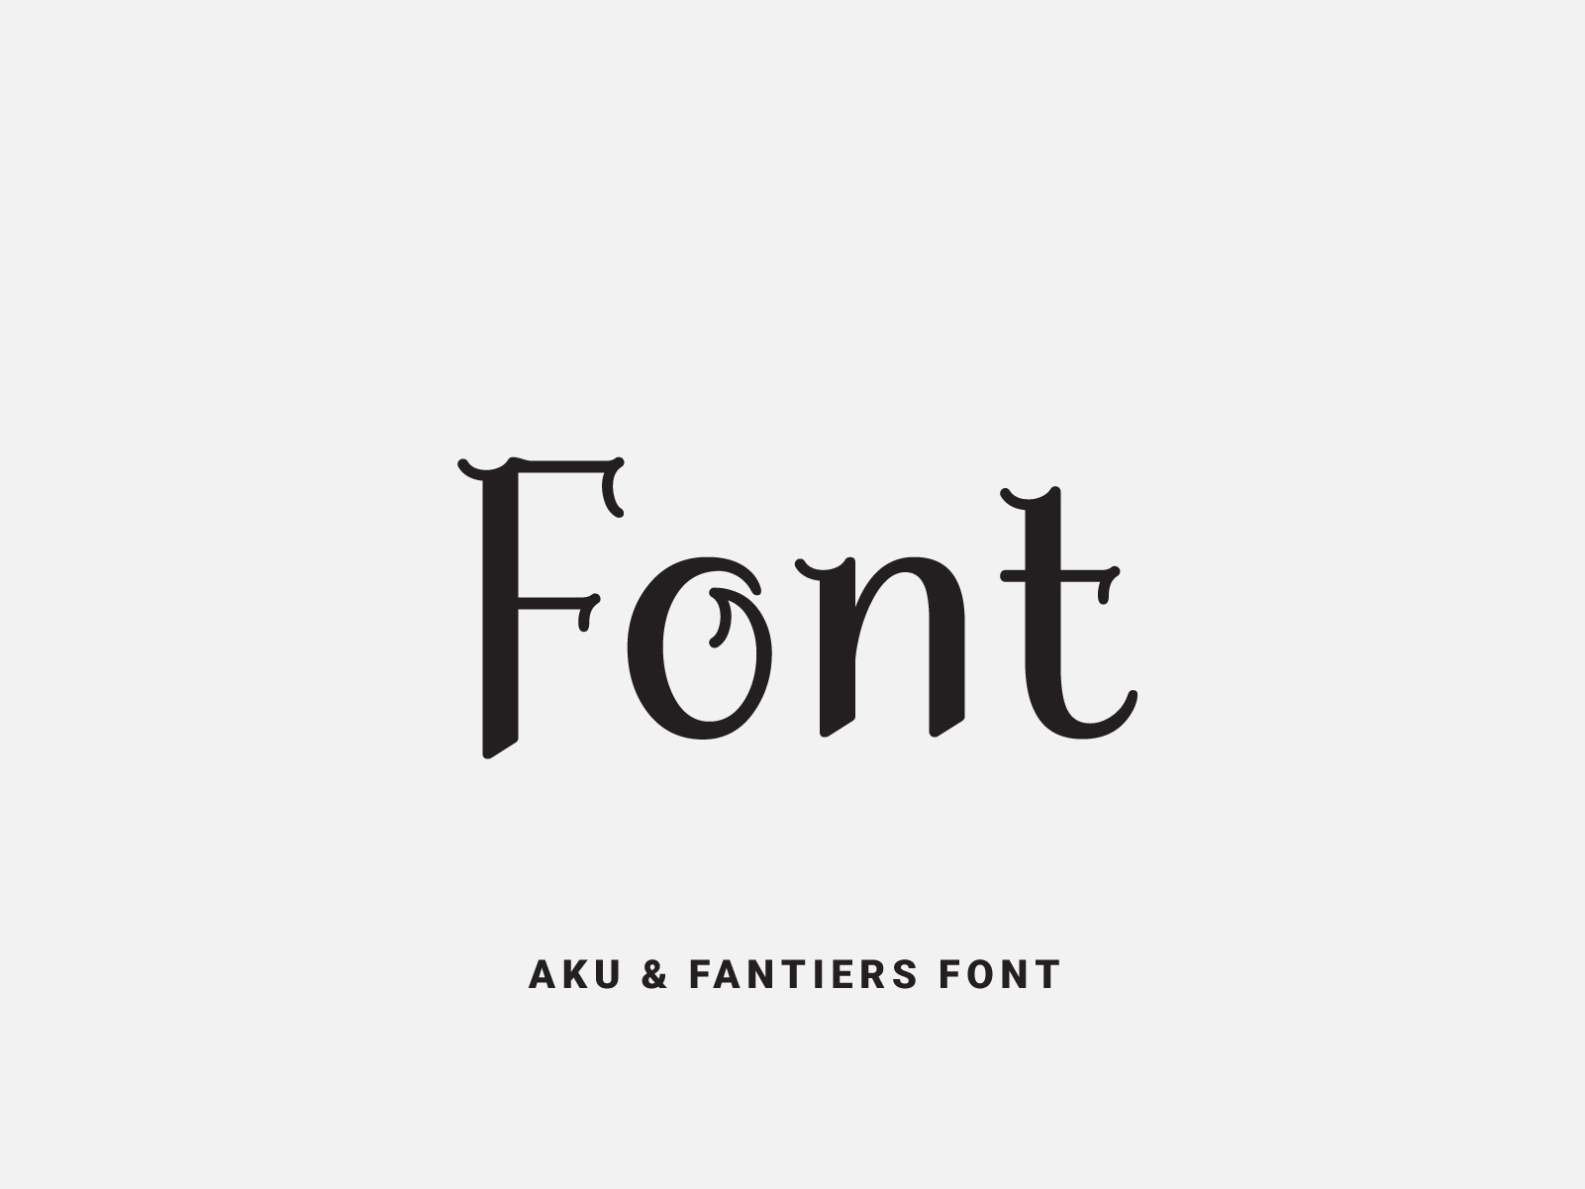 Aku & Fantiers Font by Victor on Dribbble